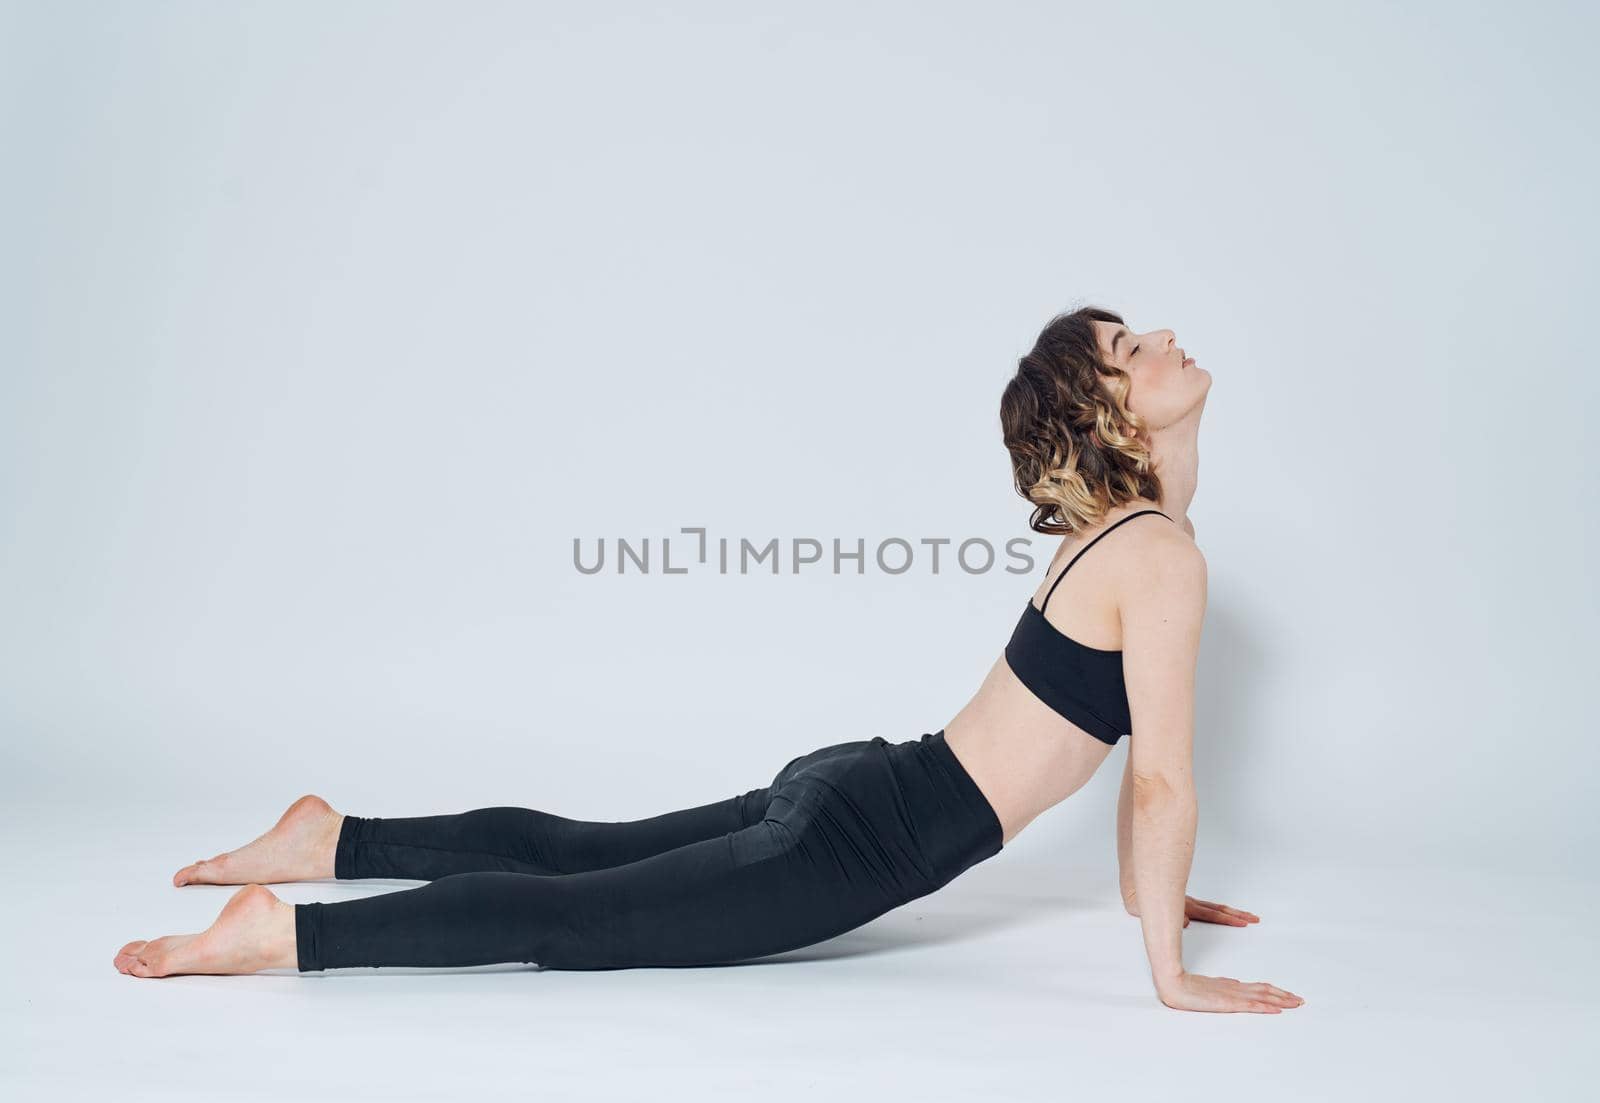 Women doing push-ups In a light room, sports meditation yoga asanas by SHOTPRIME